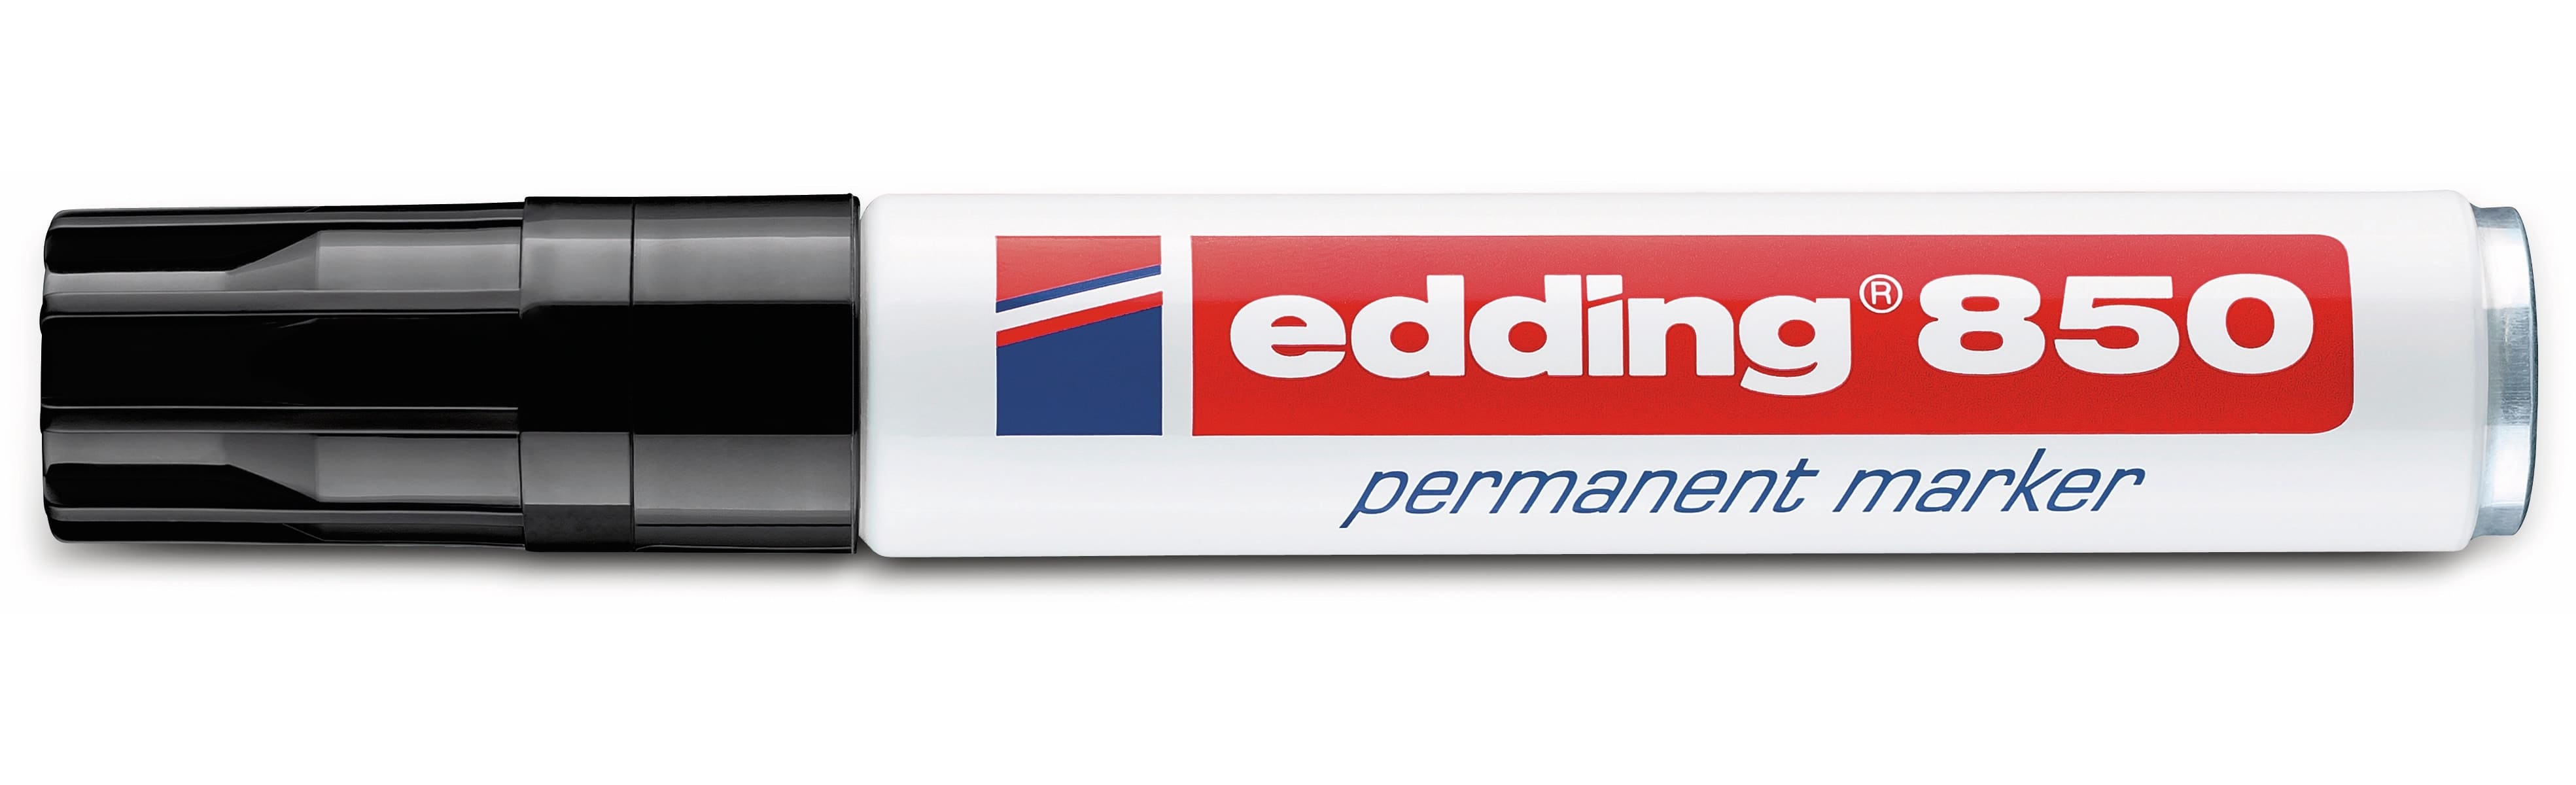 EDDING Permanent-Marker, e-850, schwarz